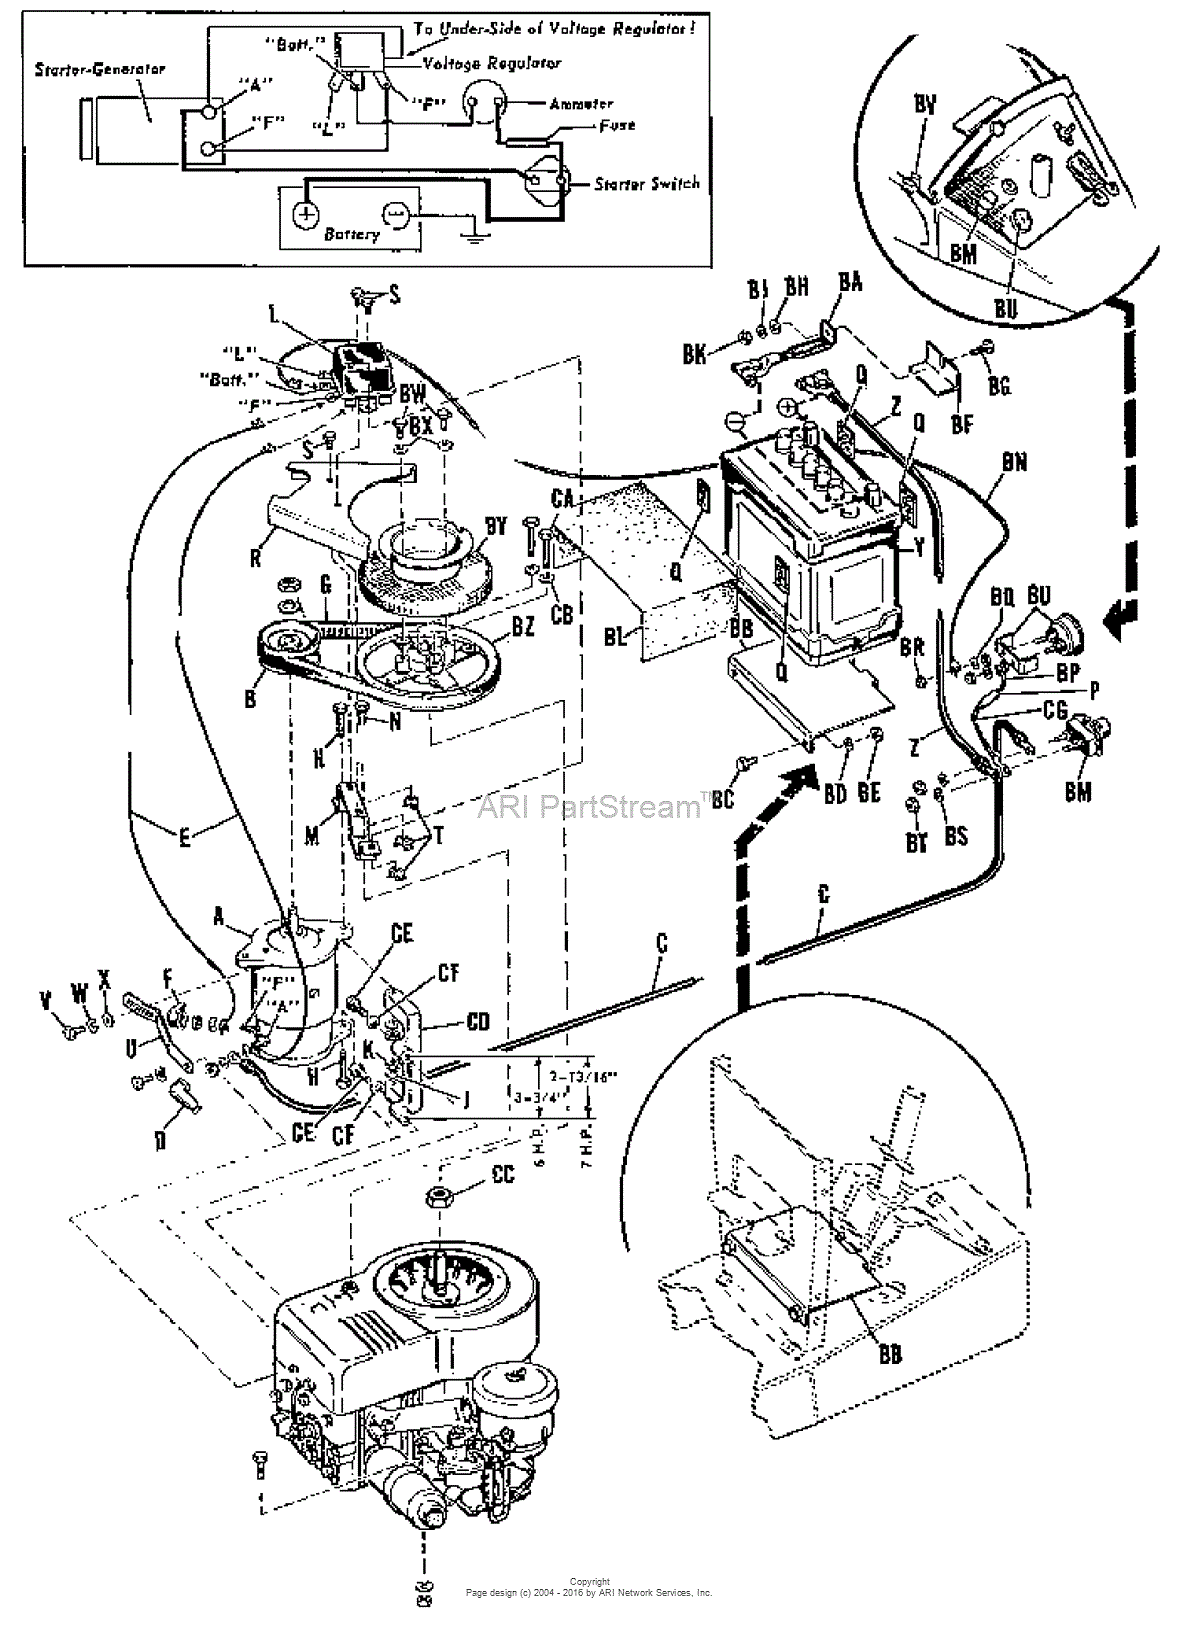 [DIAGRAM] Wiring Diagram For Starter Generator - MYDIAGRAM.ONLINE